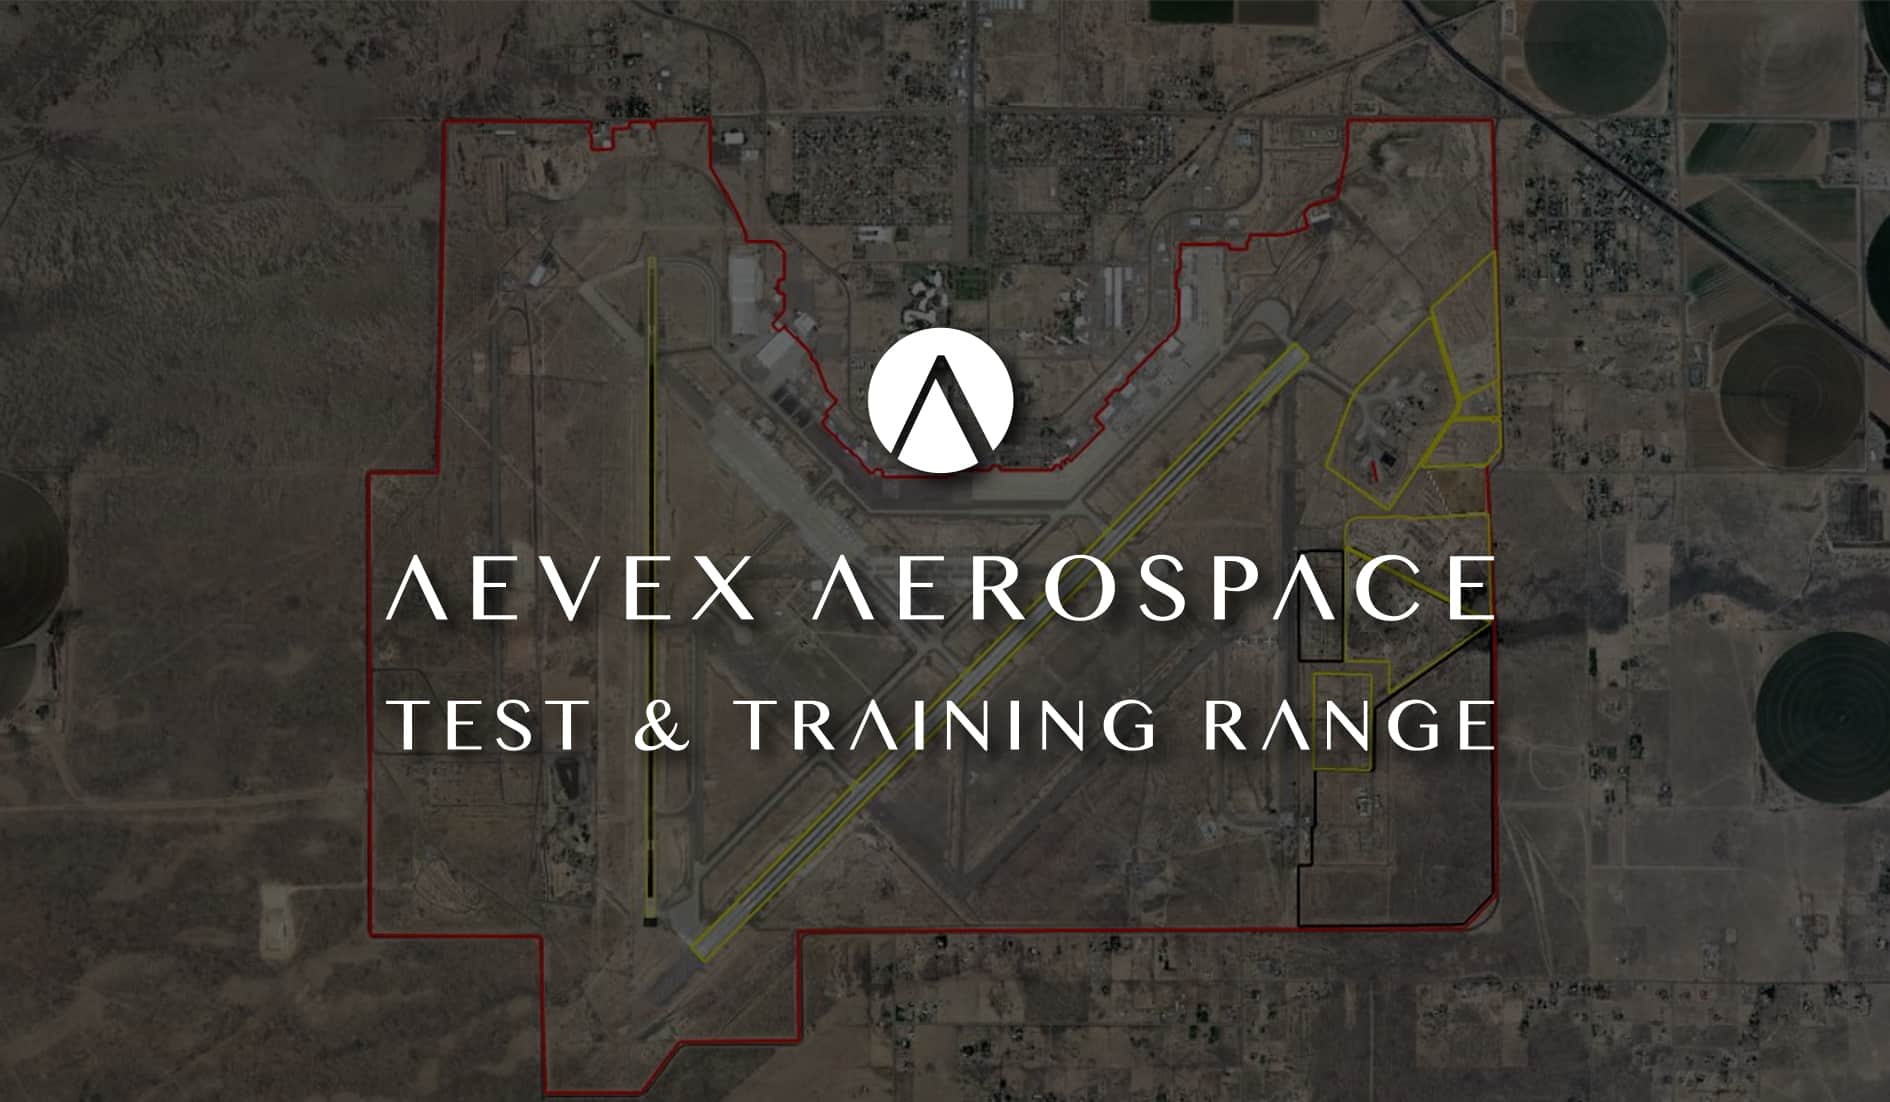 AEVEX Aerospace Announces Opening of the AEVEX Test & Training Range